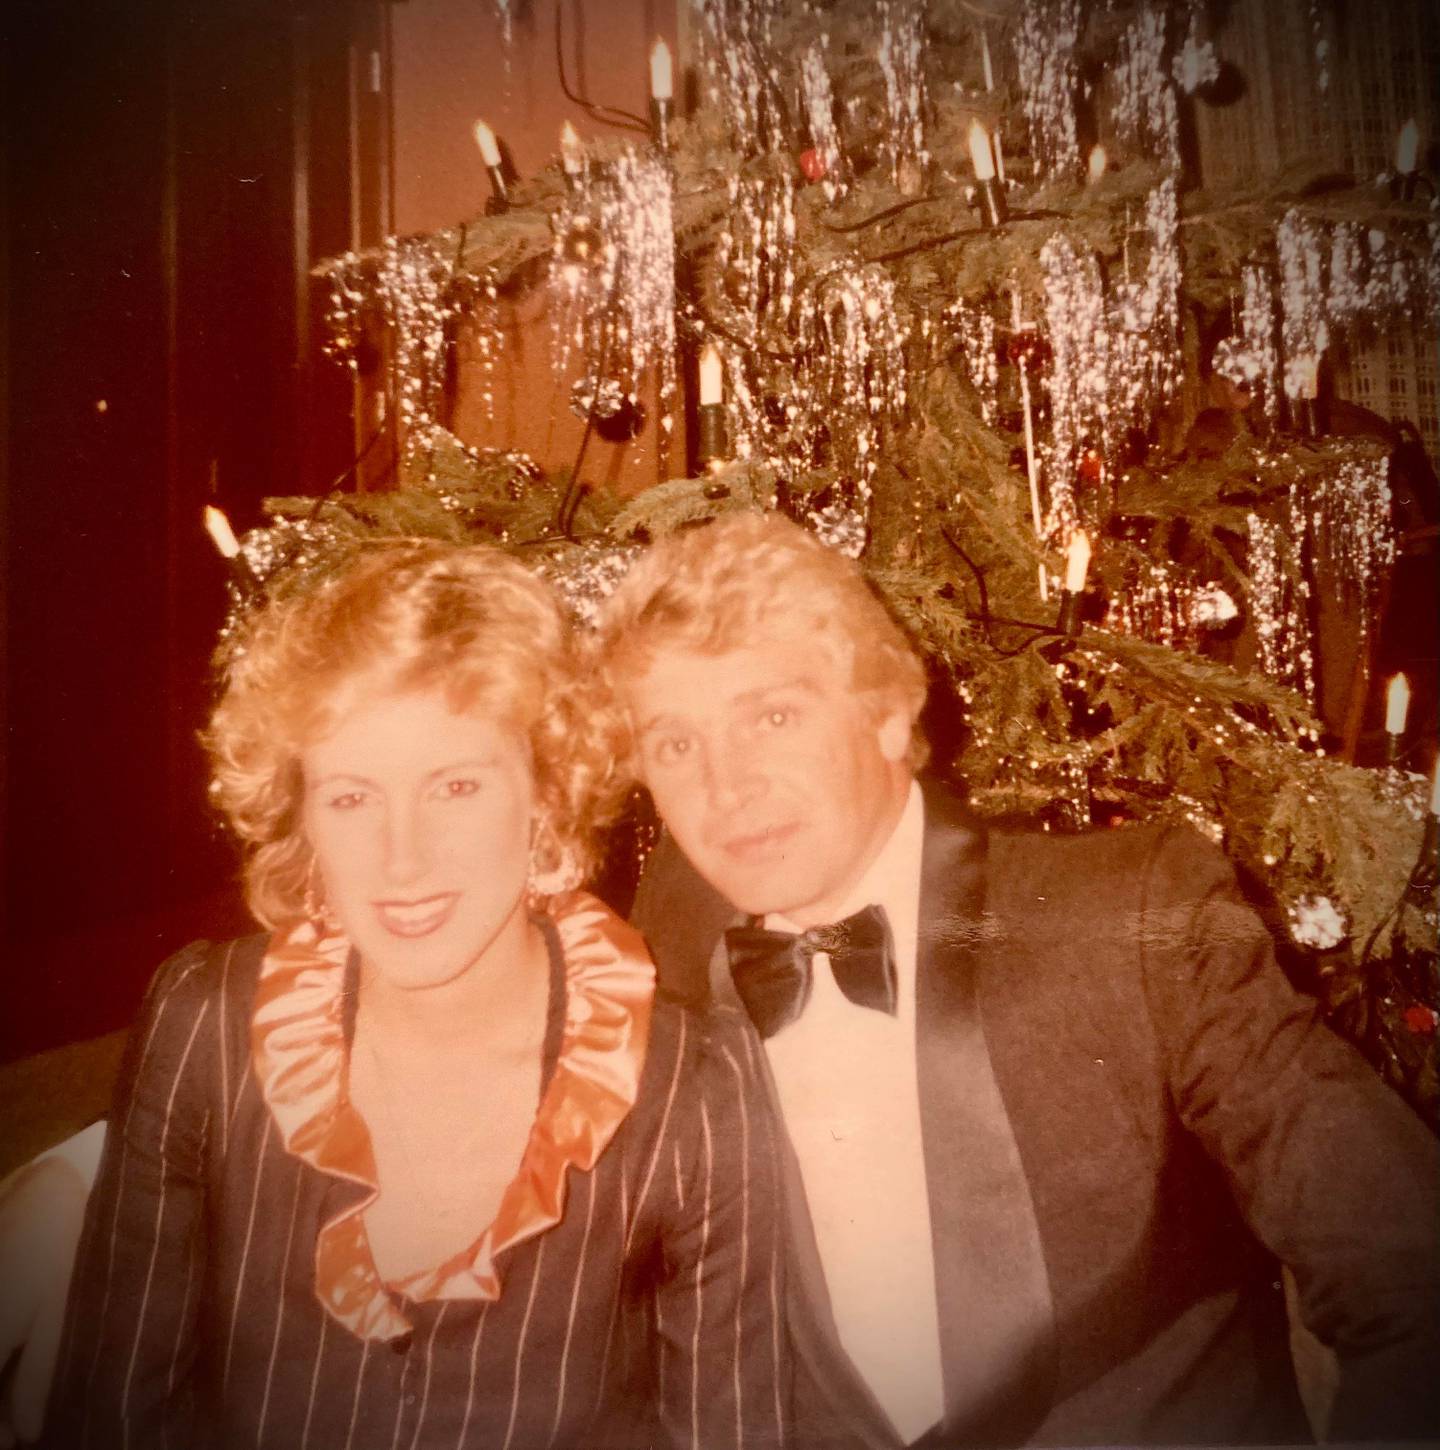 Sally Brocklebank and her husband Peter at their Christmas party in Dubai, 1980. Photo: Sally Brocklebank